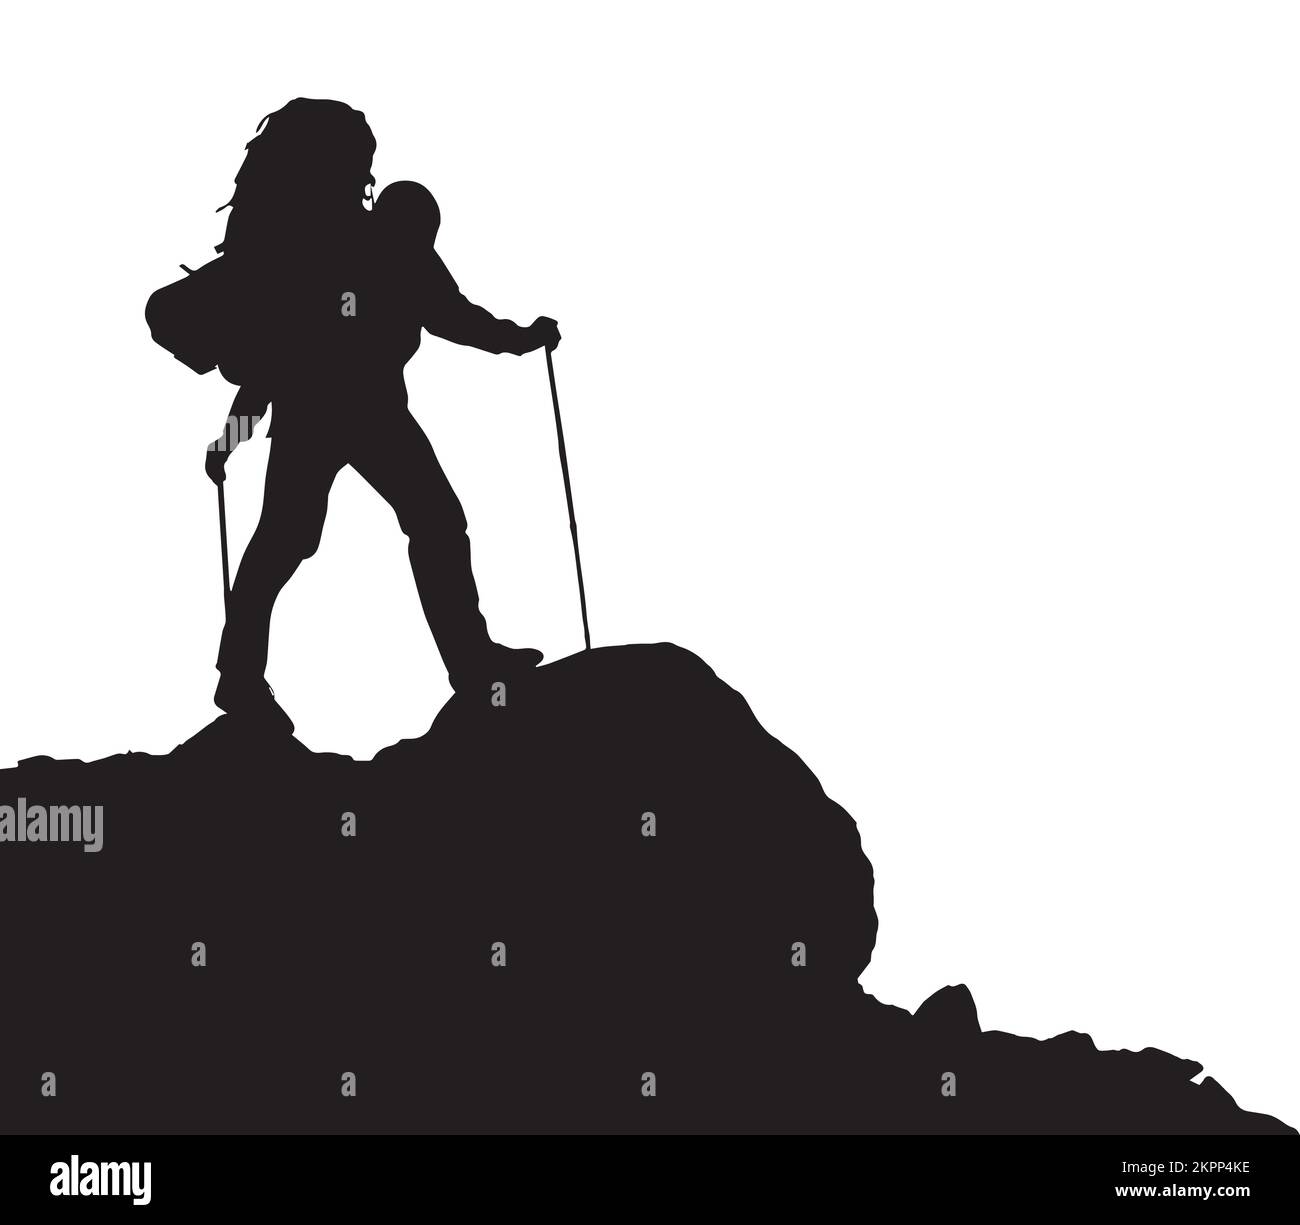 black silhouette of hiker or tourist or backpacker on white background, vector illustration Stock Vector